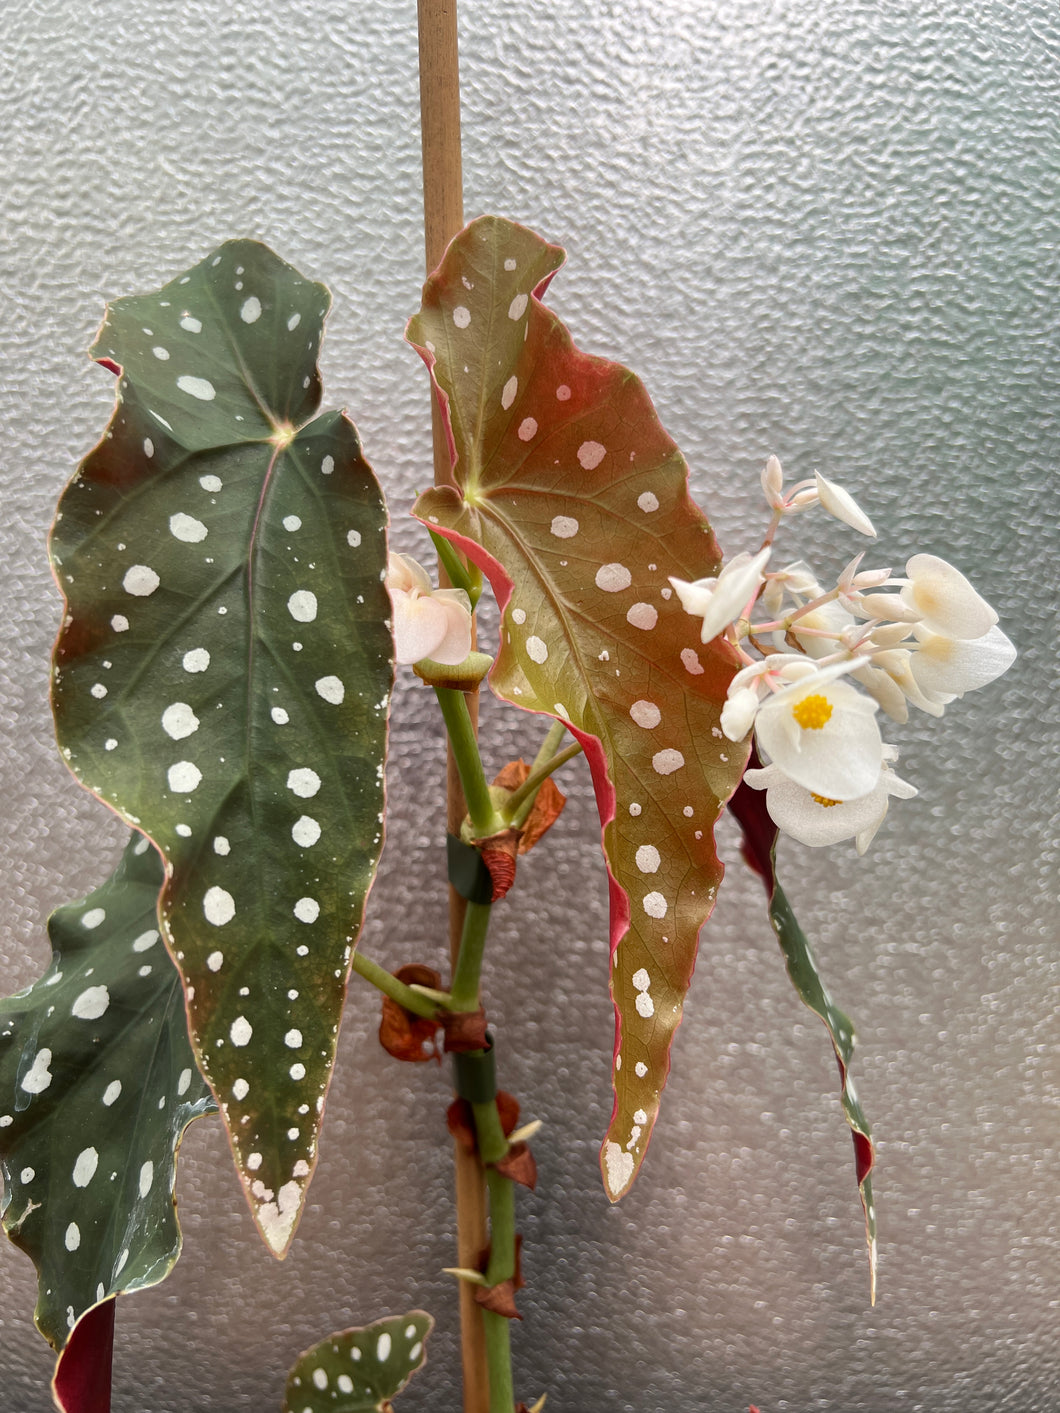 Begonia maculata ‘Wightii’